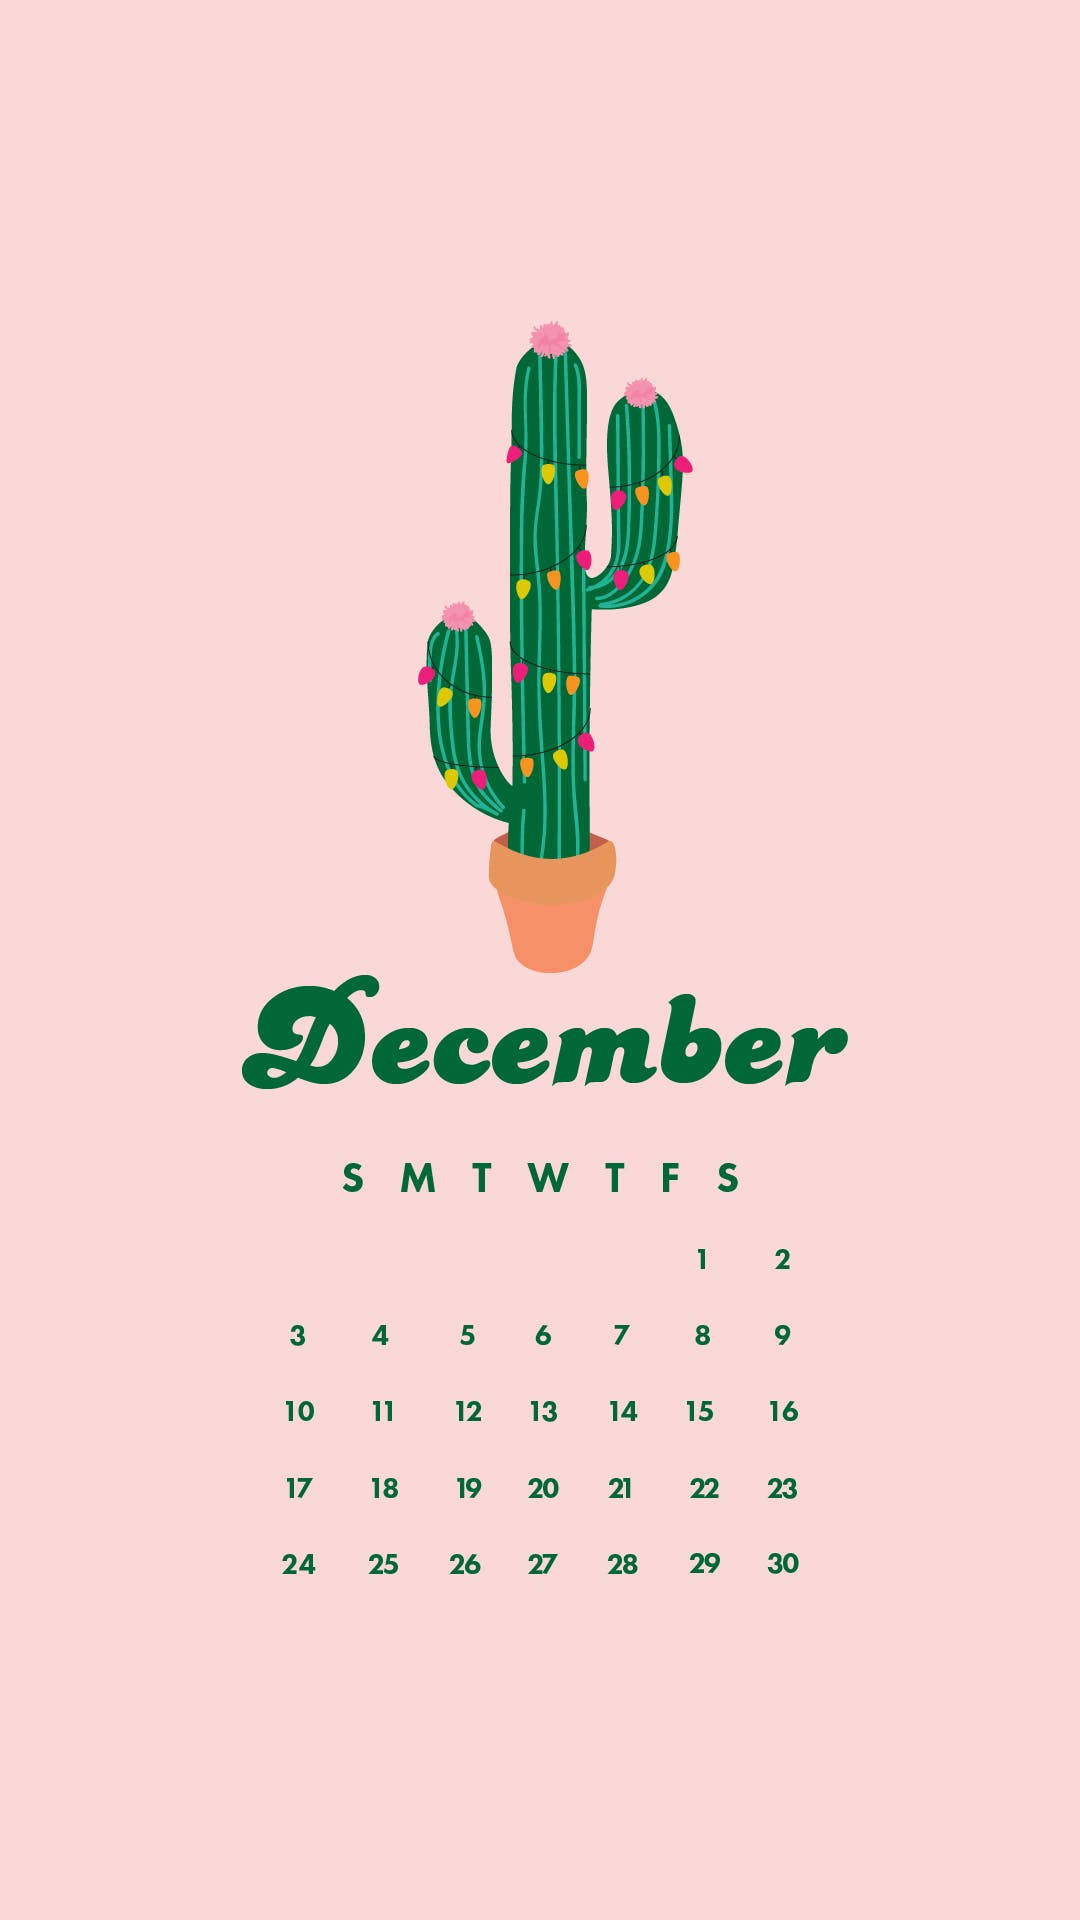 December Cactus Calendar